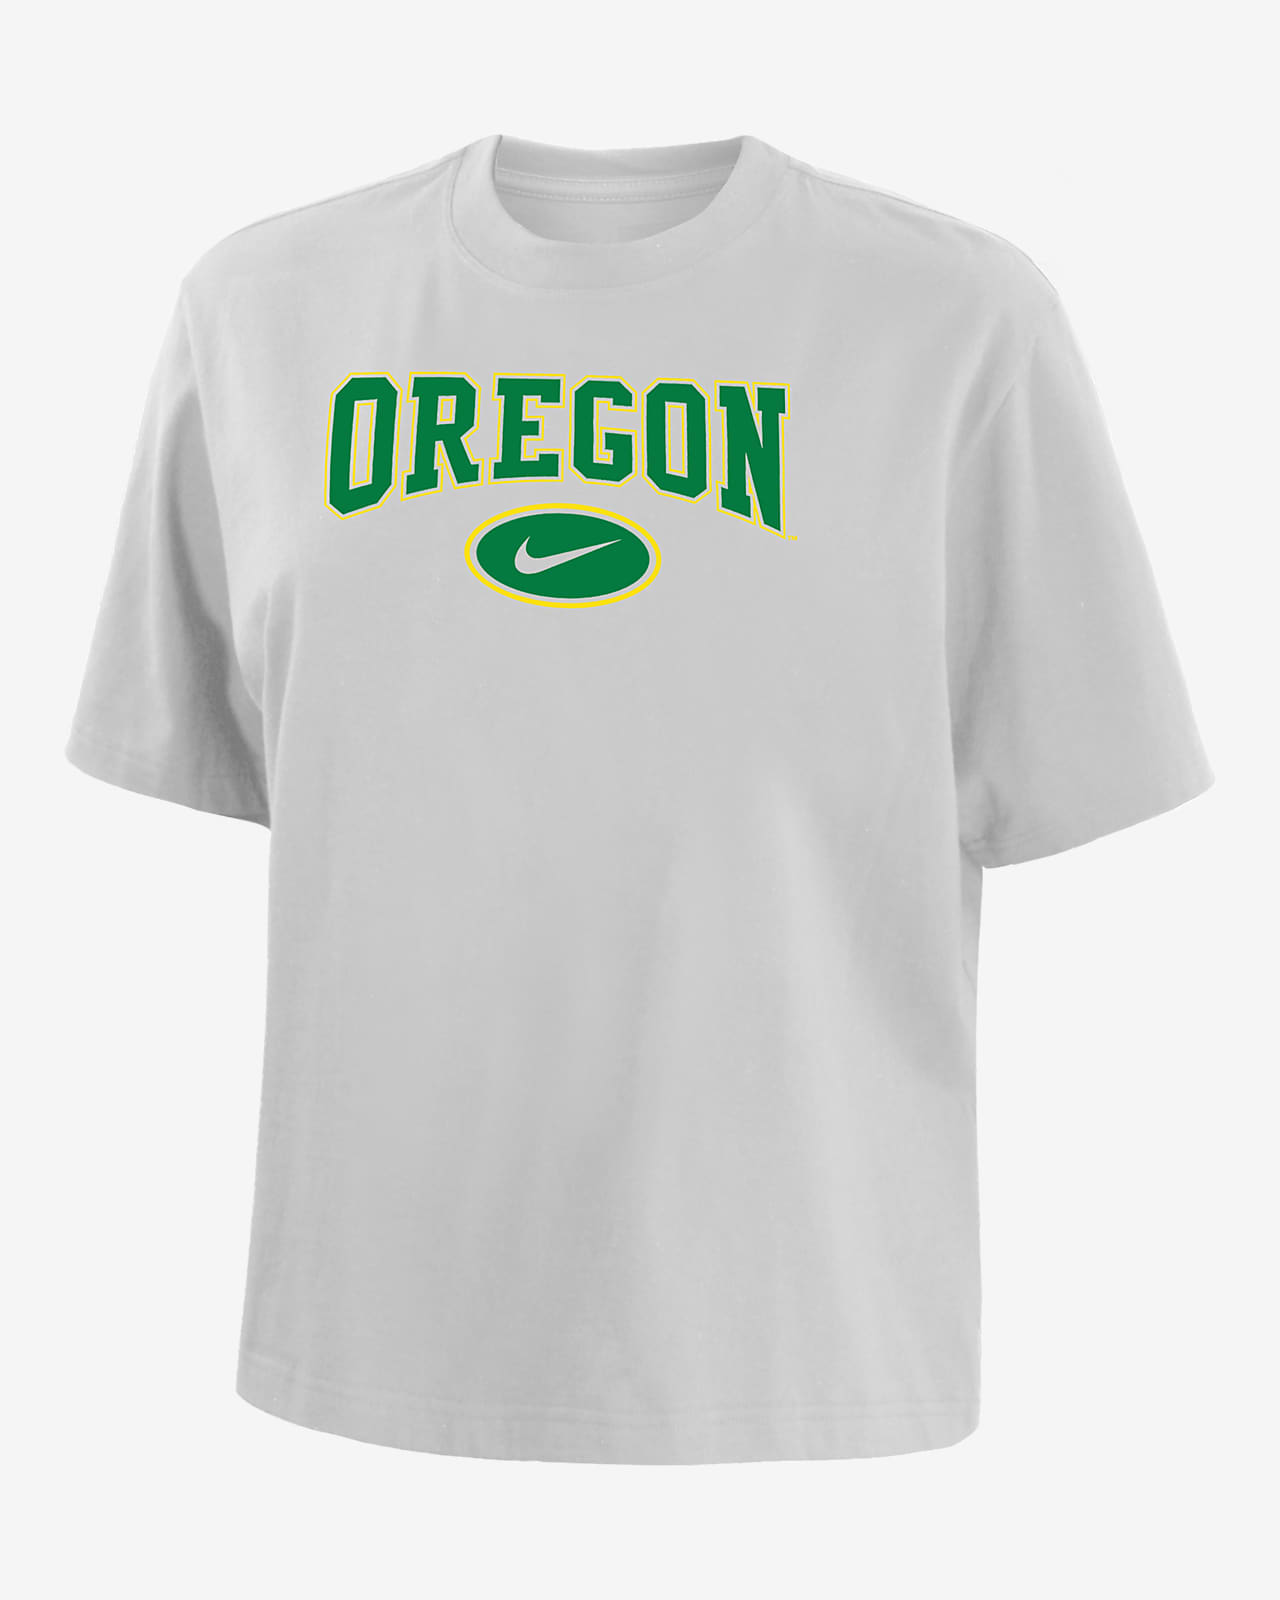 Oregon Women's Nike College Boxy T-Shirt